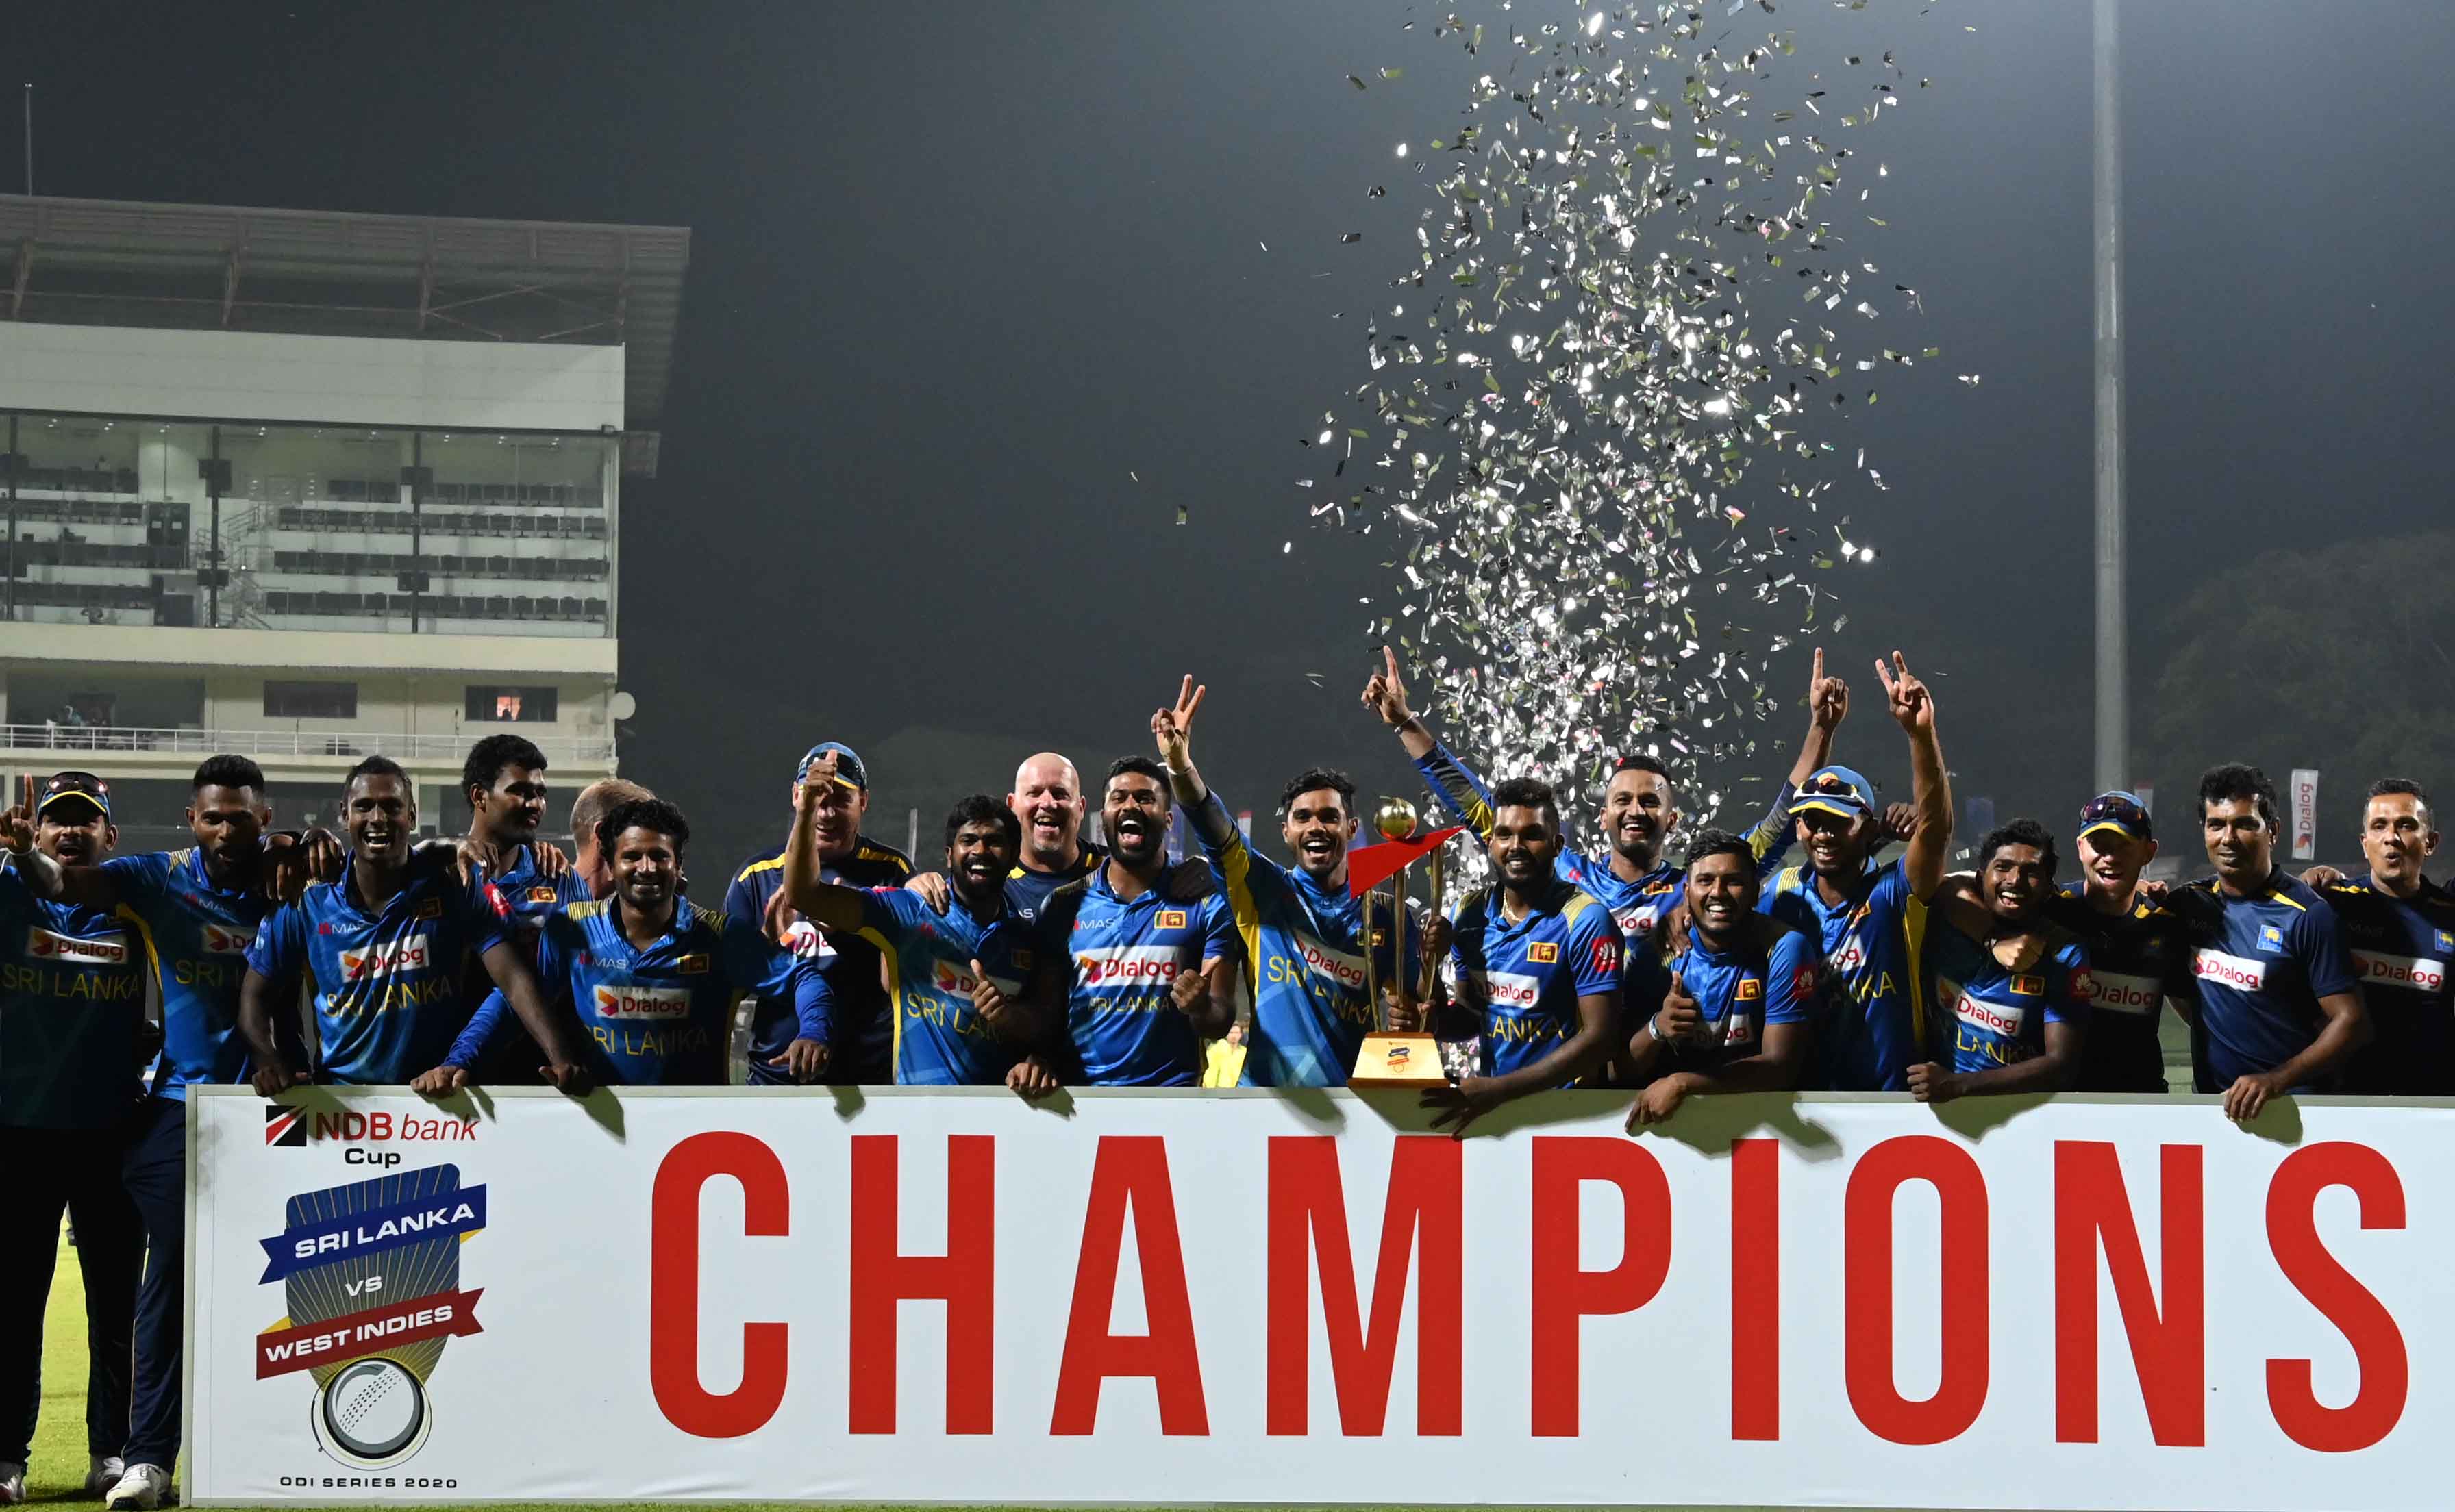 Sri Lanka win by 6 runs in high scoring affair as West Indies make valiant effort